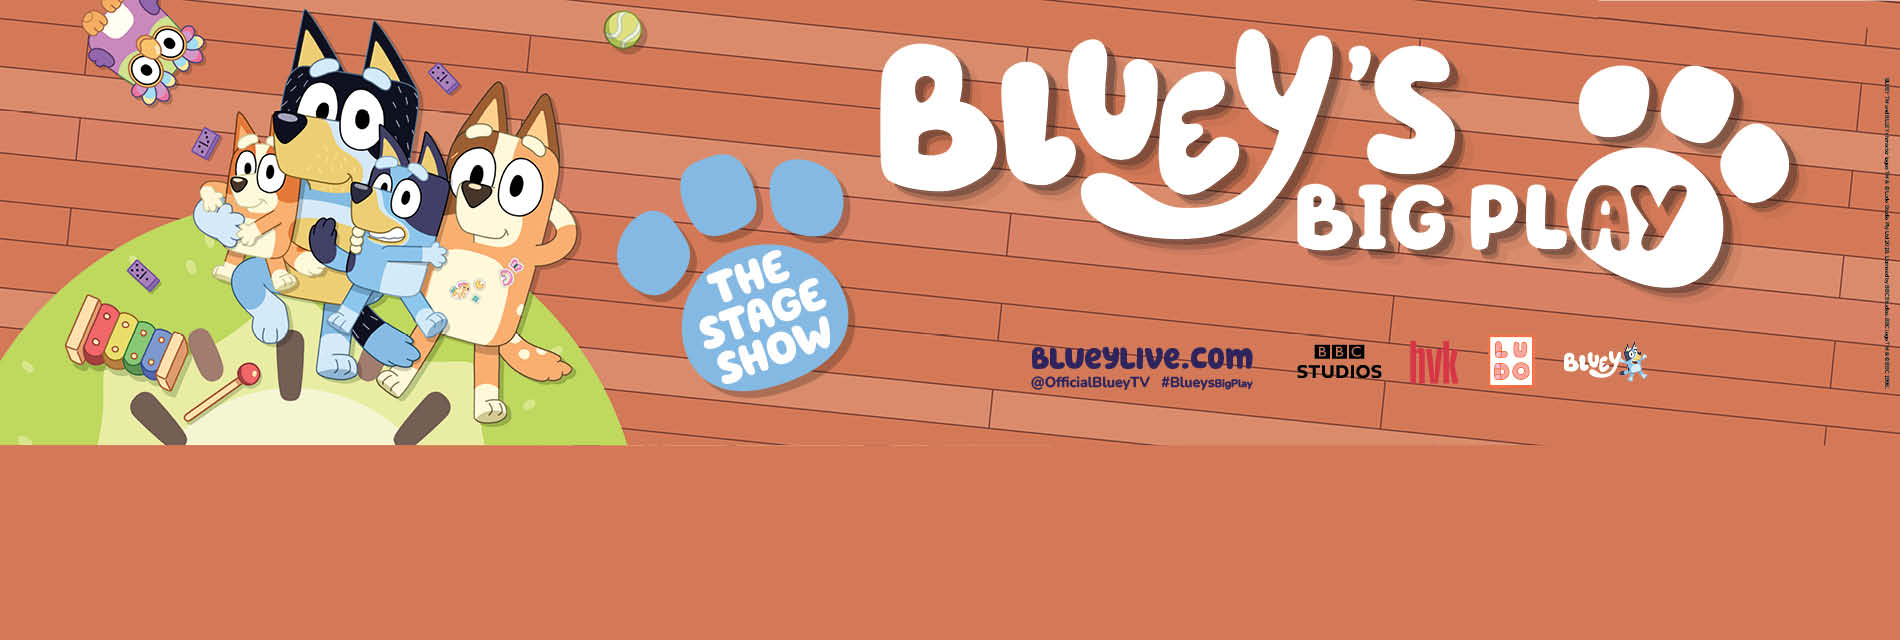 Slide 3: Bluey's Big Play